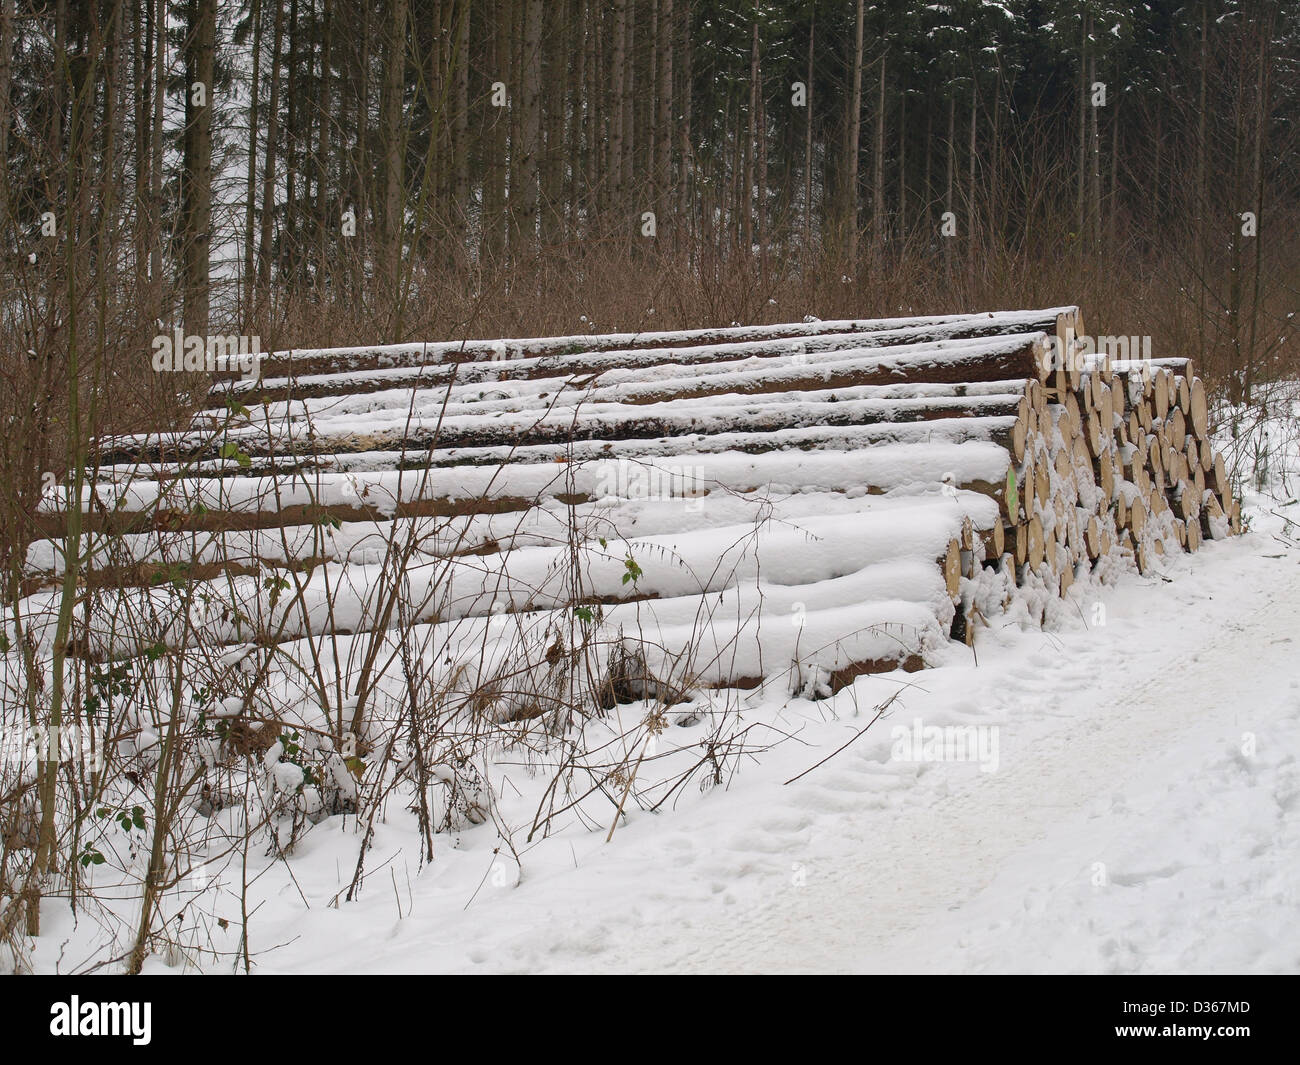 Marchand - snowbound couper sciage dans le bois / Holzlager Baumstämme gefällte - verschneite, im Wald Banque D'Images